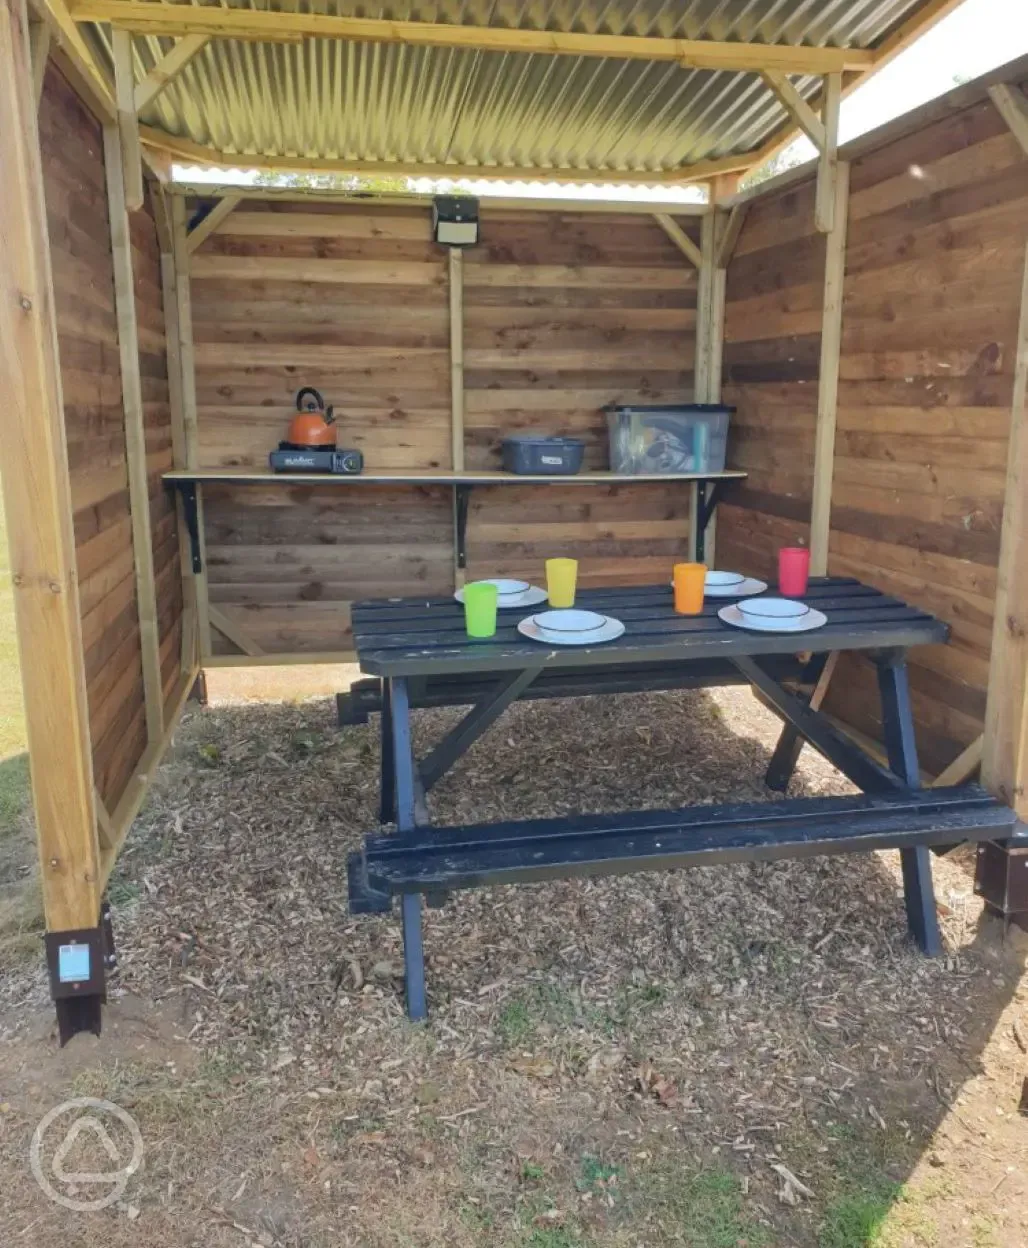 Bell tent field kitchen